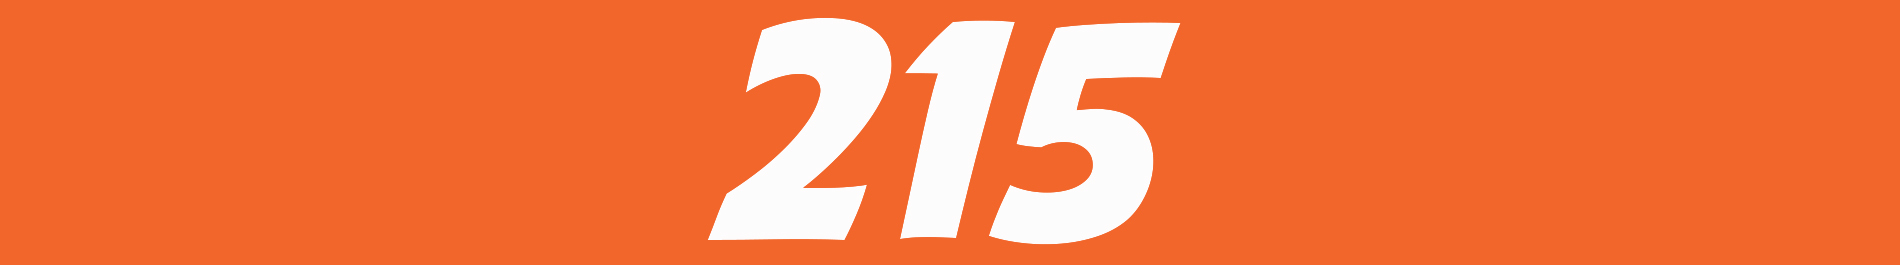 orange block with 215 number